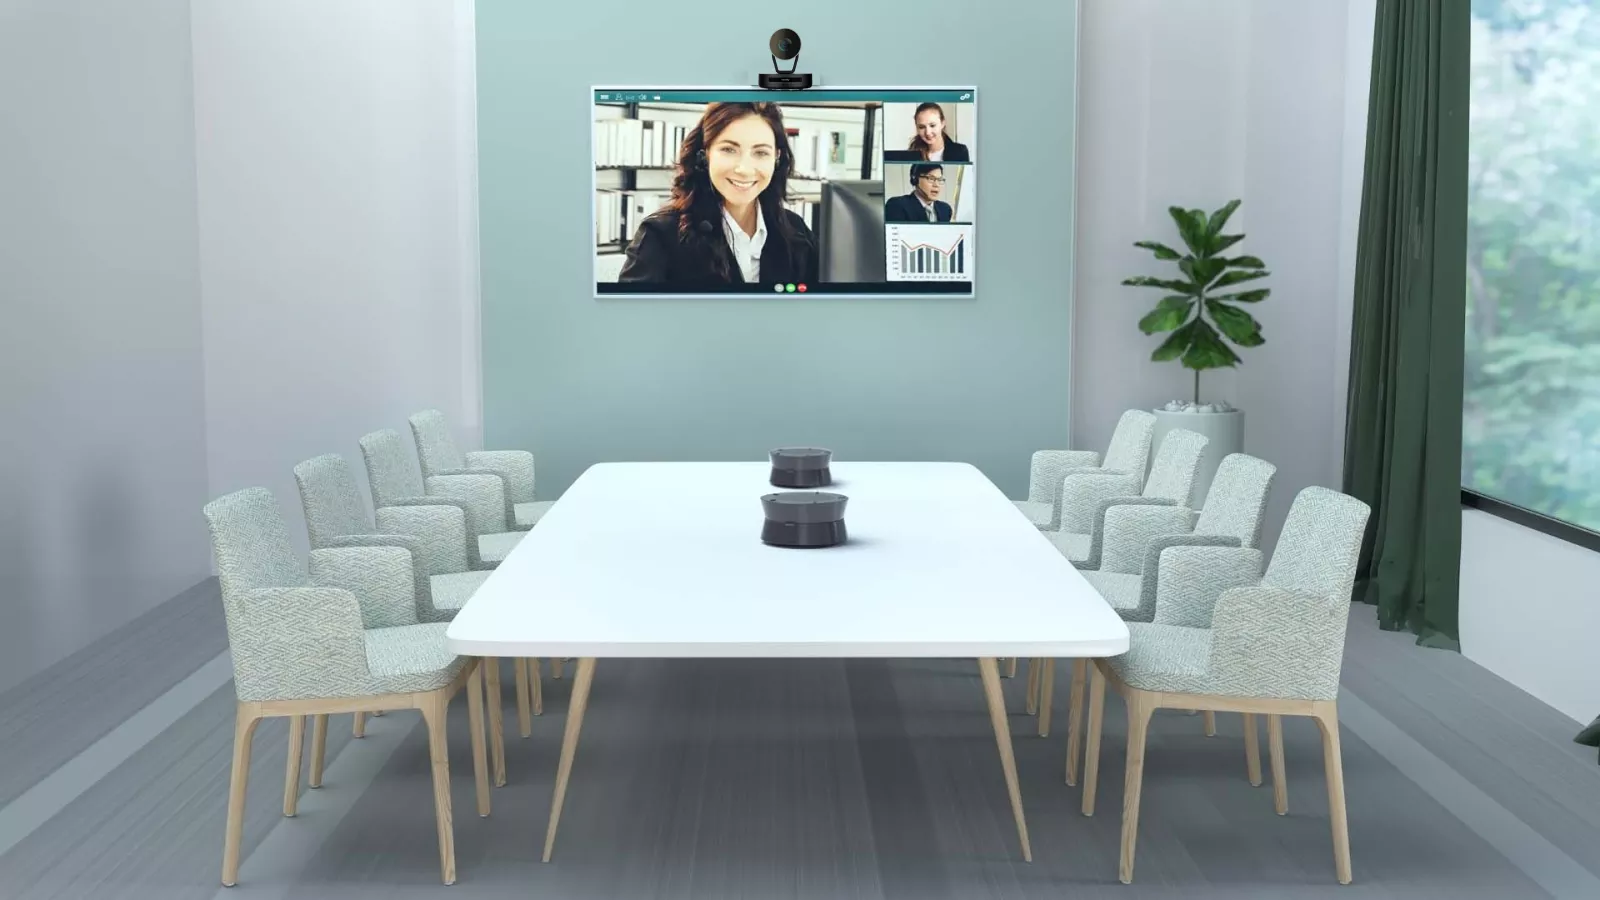 NEARITY Medium Meeting Room Solution, A20 Speakerphone, Wide-angle Camera